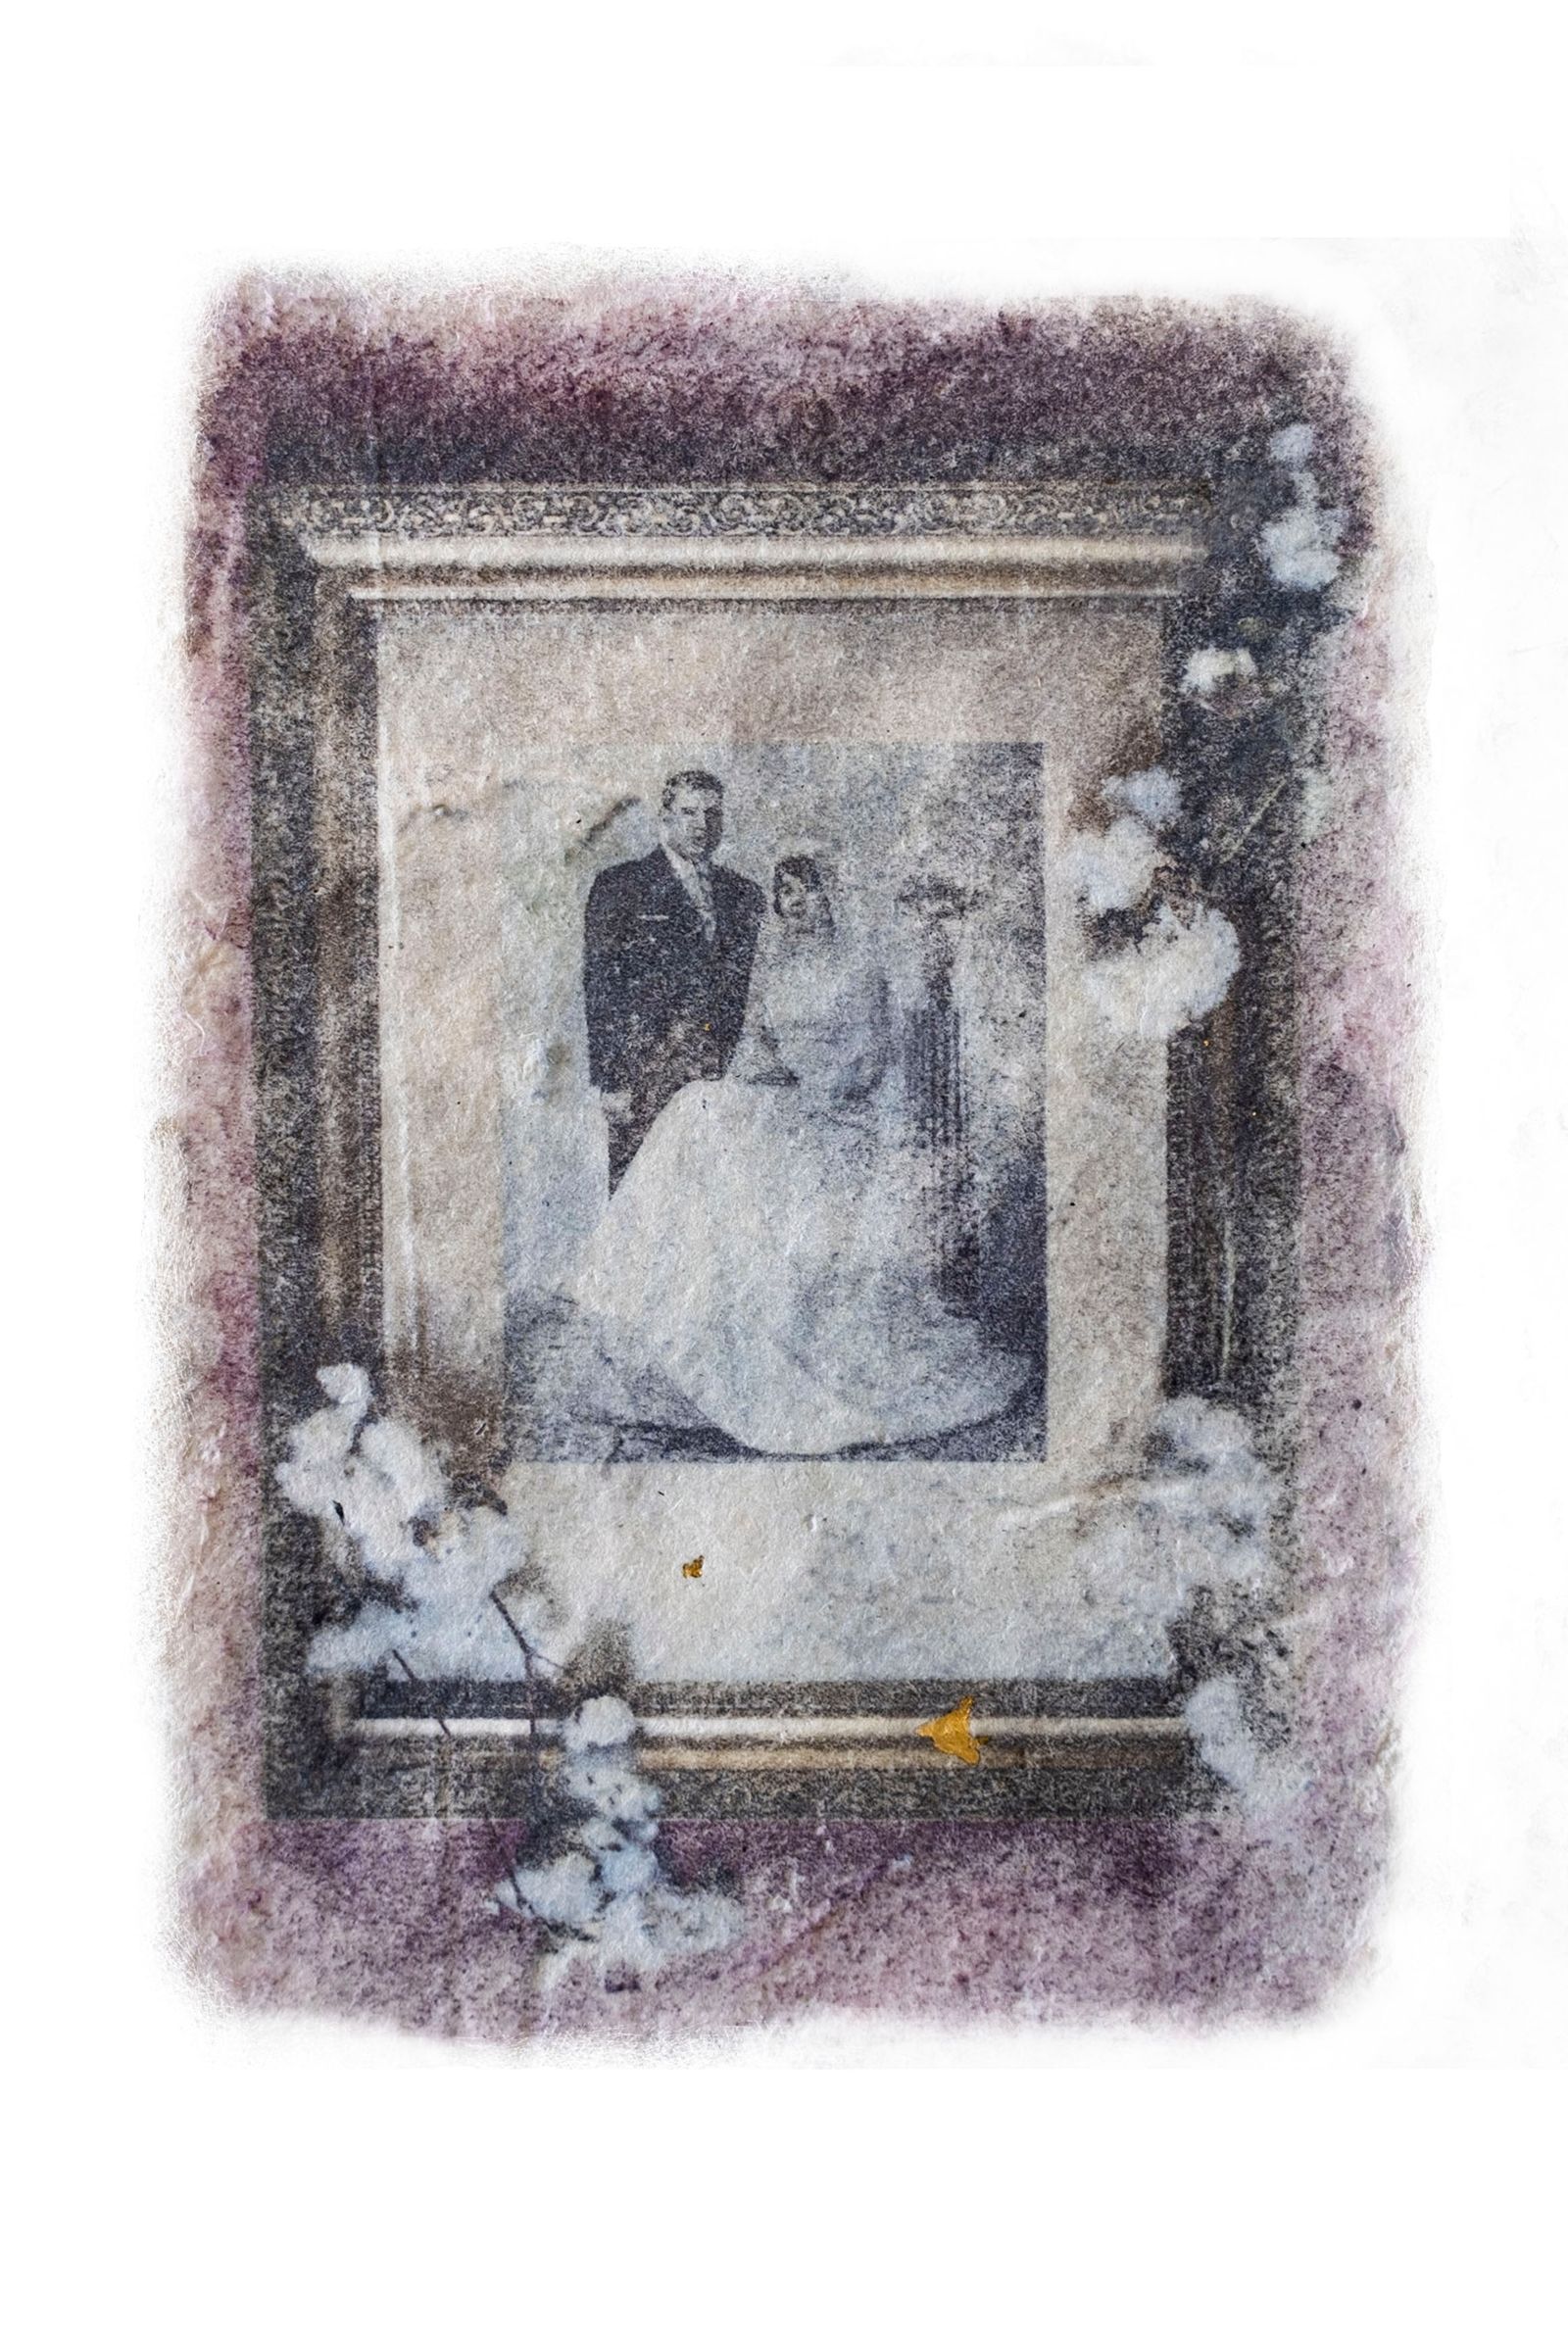 © Amina Kadous - My grandparent’s wedding portrait, 1961 Image transferred onto handmade cotton paper.